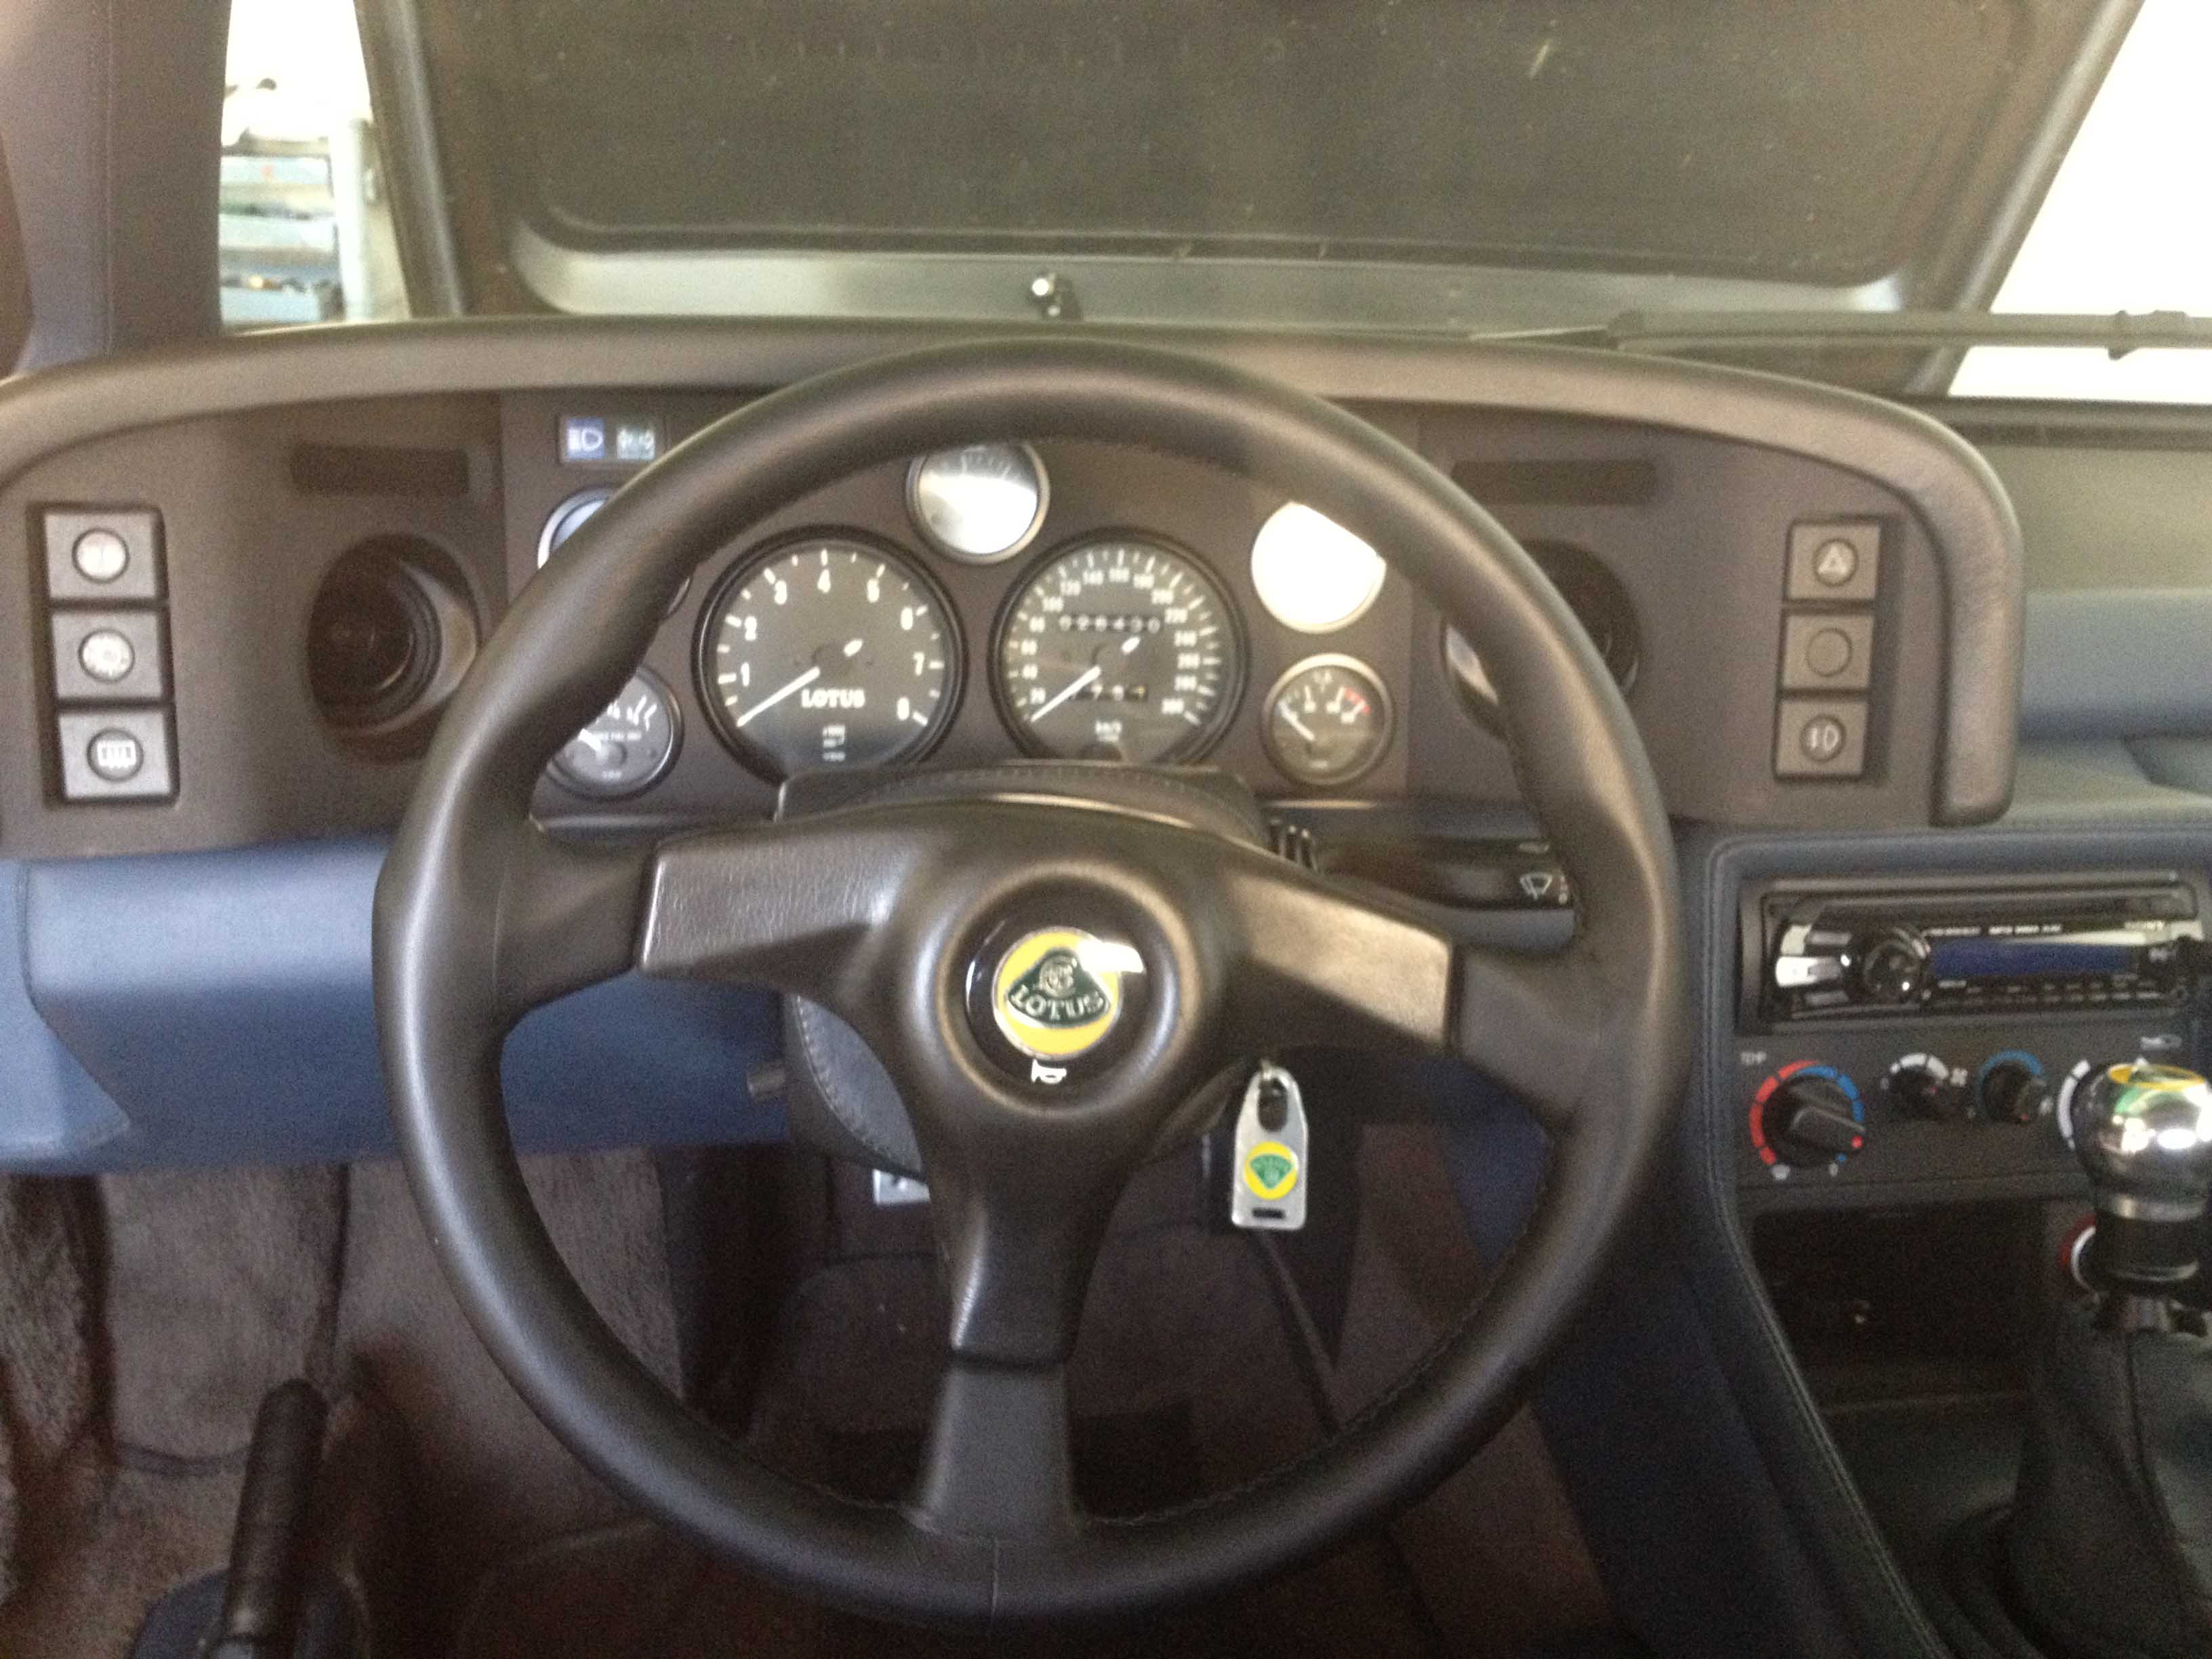 Lotus Esprit Sport 300 cockpit